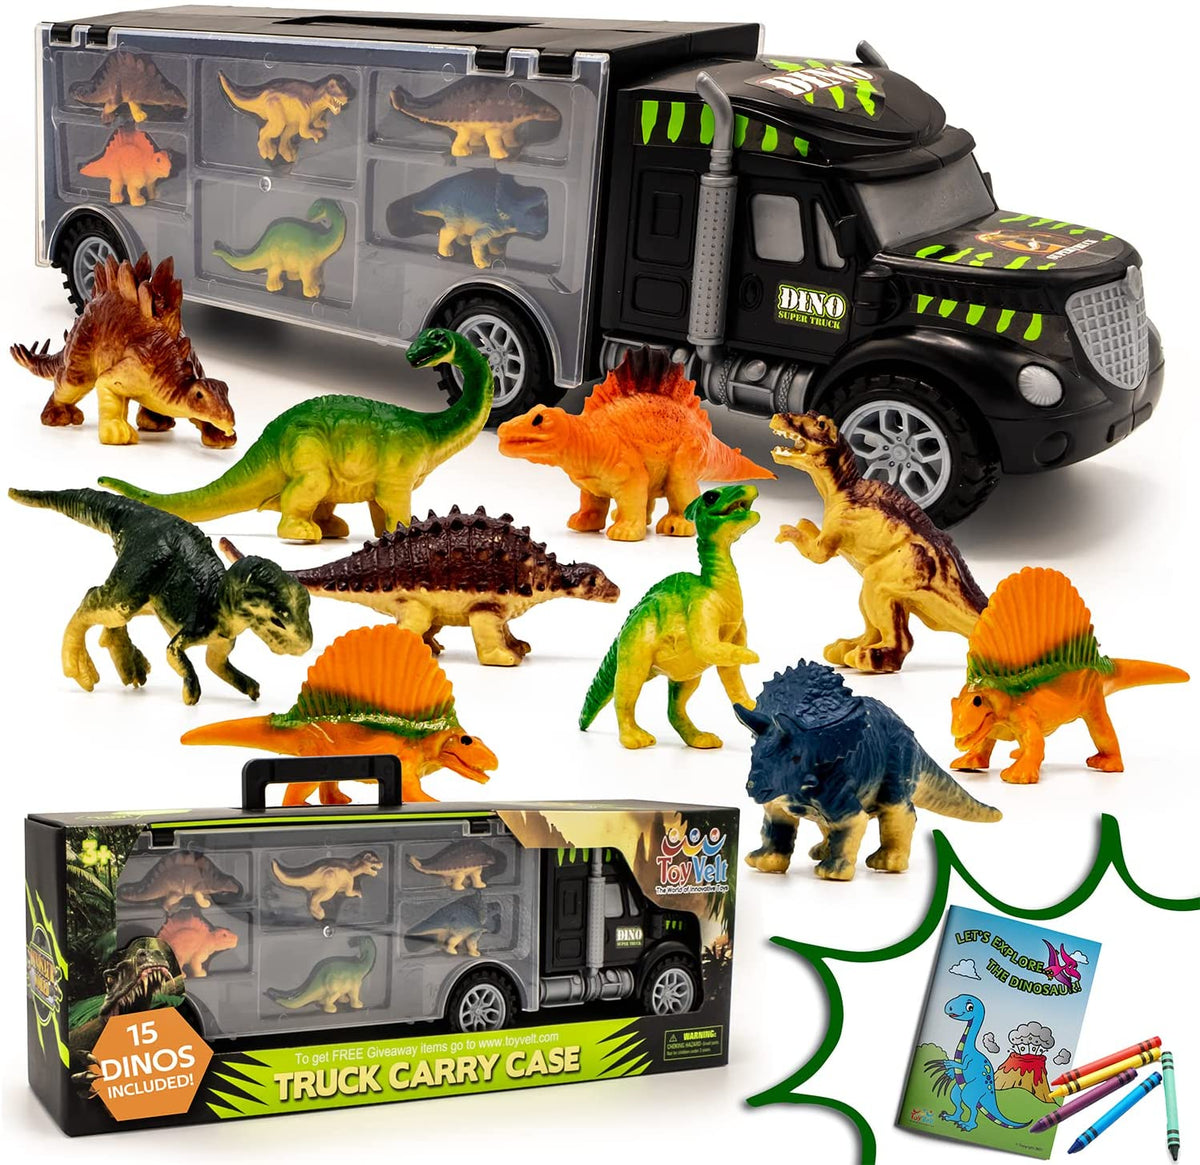 Toyvelt Dinosaurs Transport Car Carrier Truck Toy